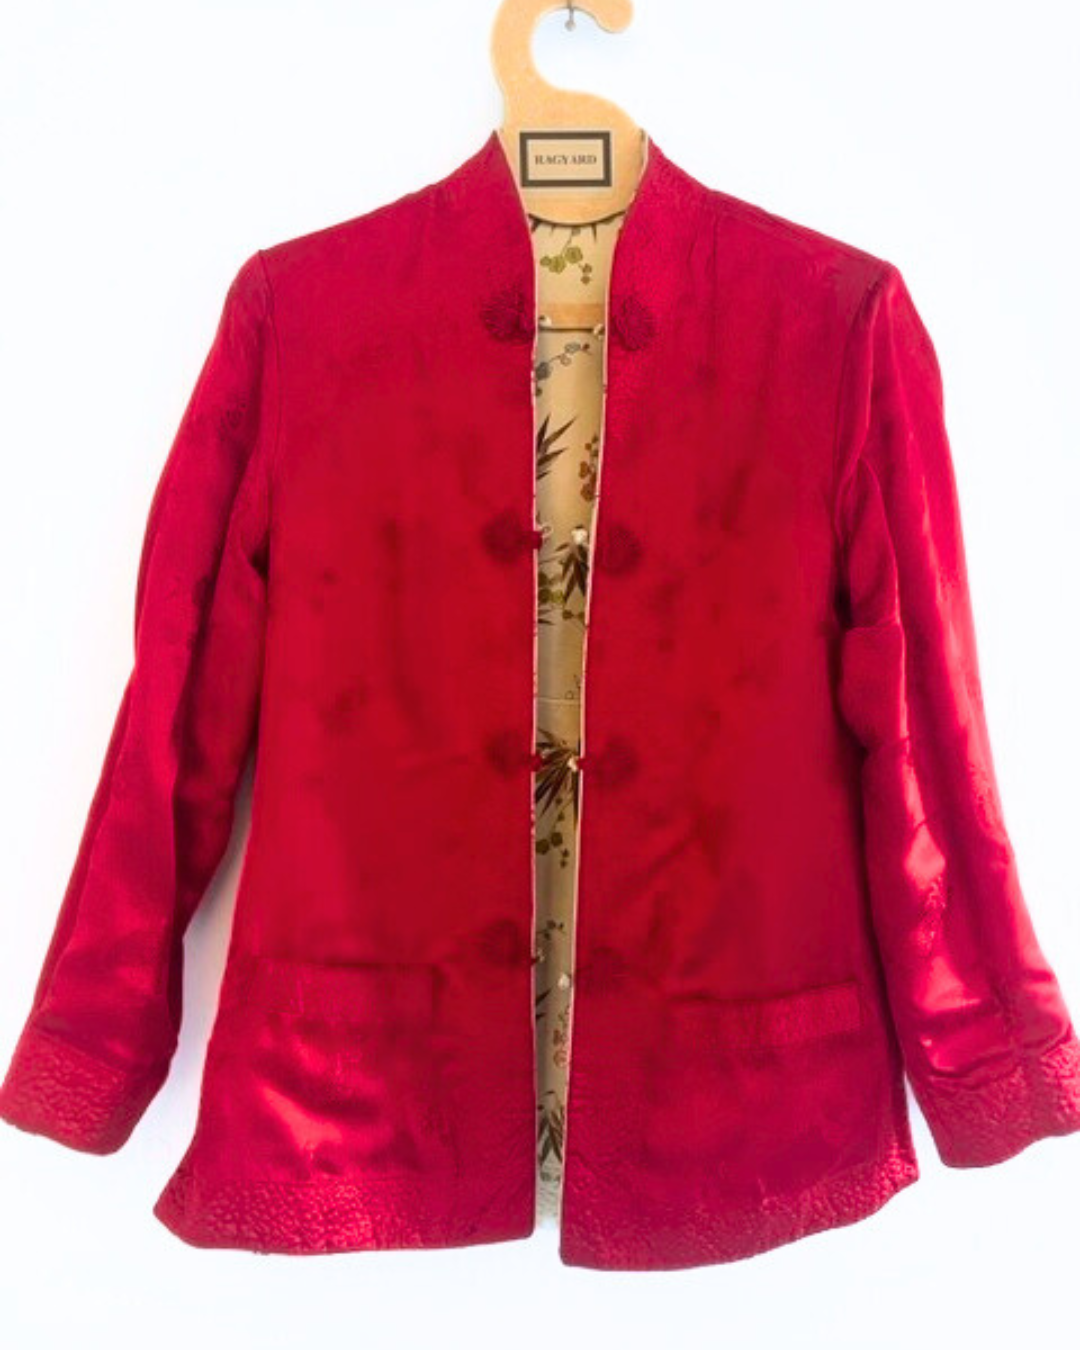 GENUINE Vintage Chinese reversible brocade Jacket - XS/SMALL